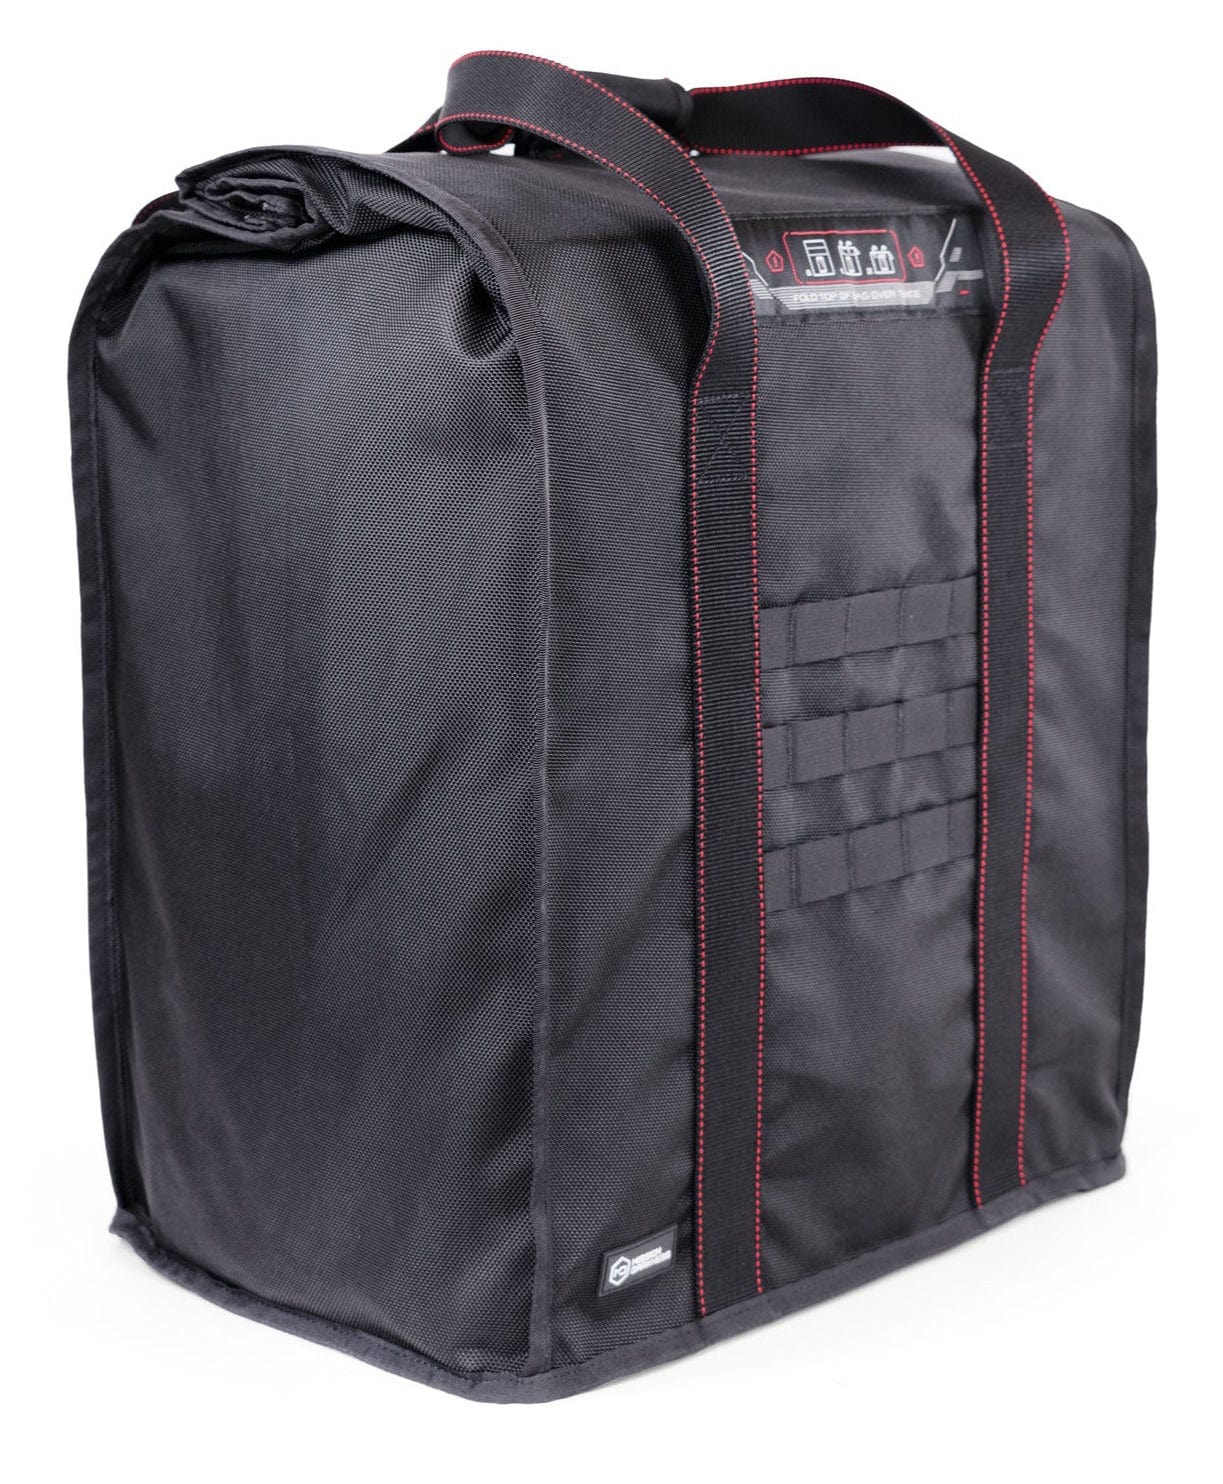 T10 Faraday Bag for Towers MOS Equipment Faraday Bags